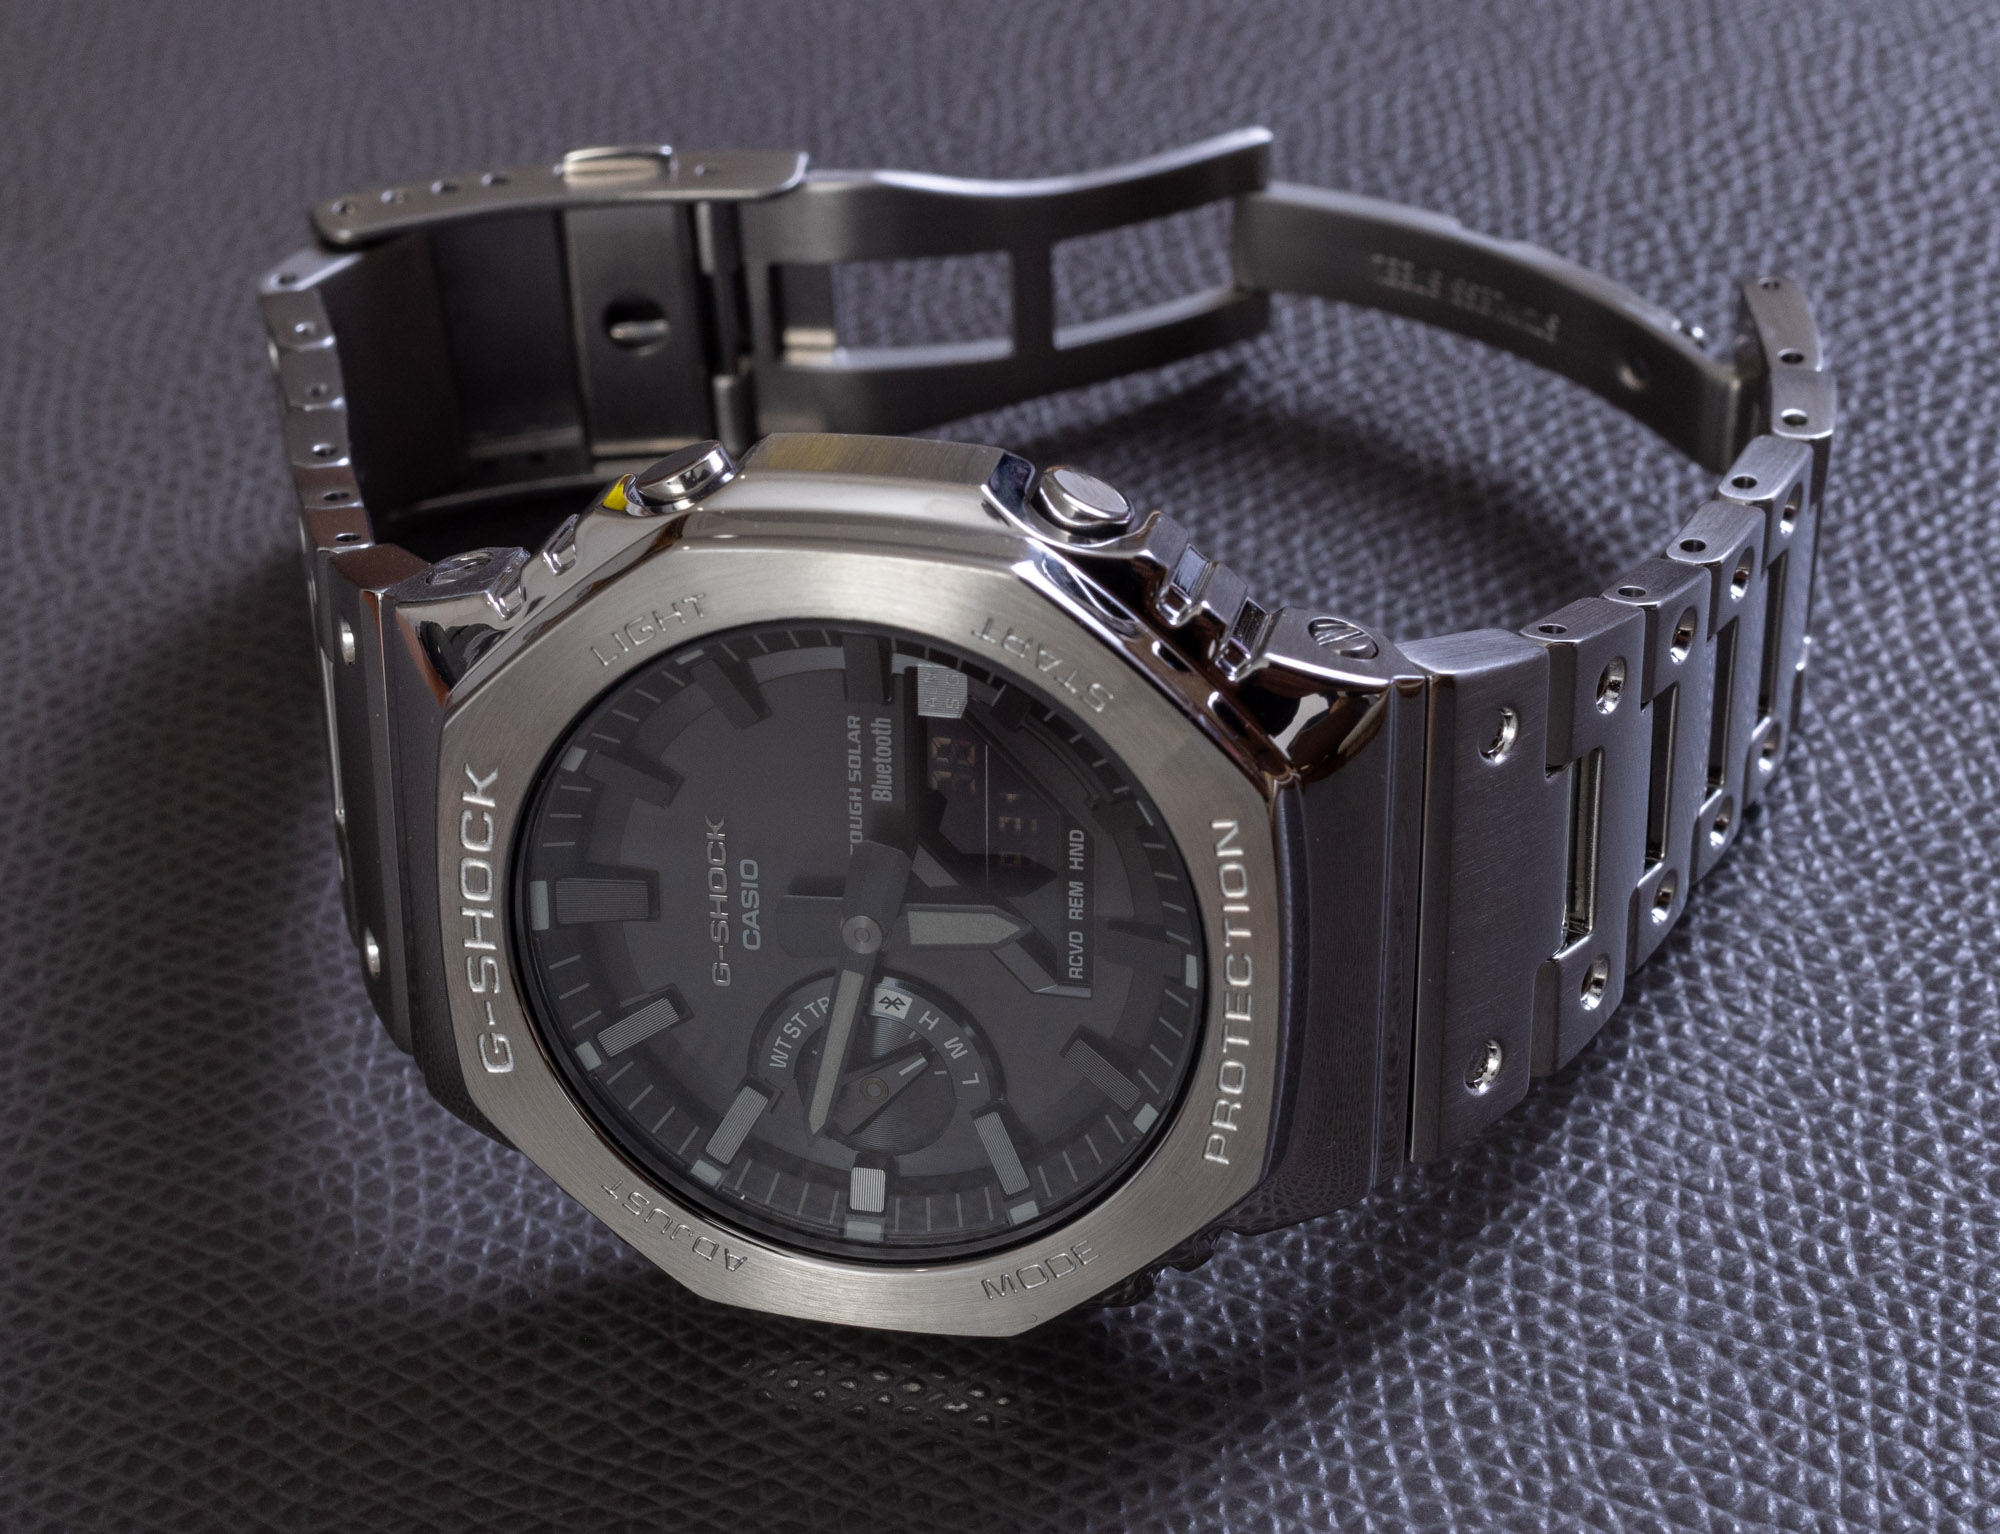 On aBlogtoWatch Bracelet Review: GMB2100 G-Shock | In Casio Full-Metal Watch